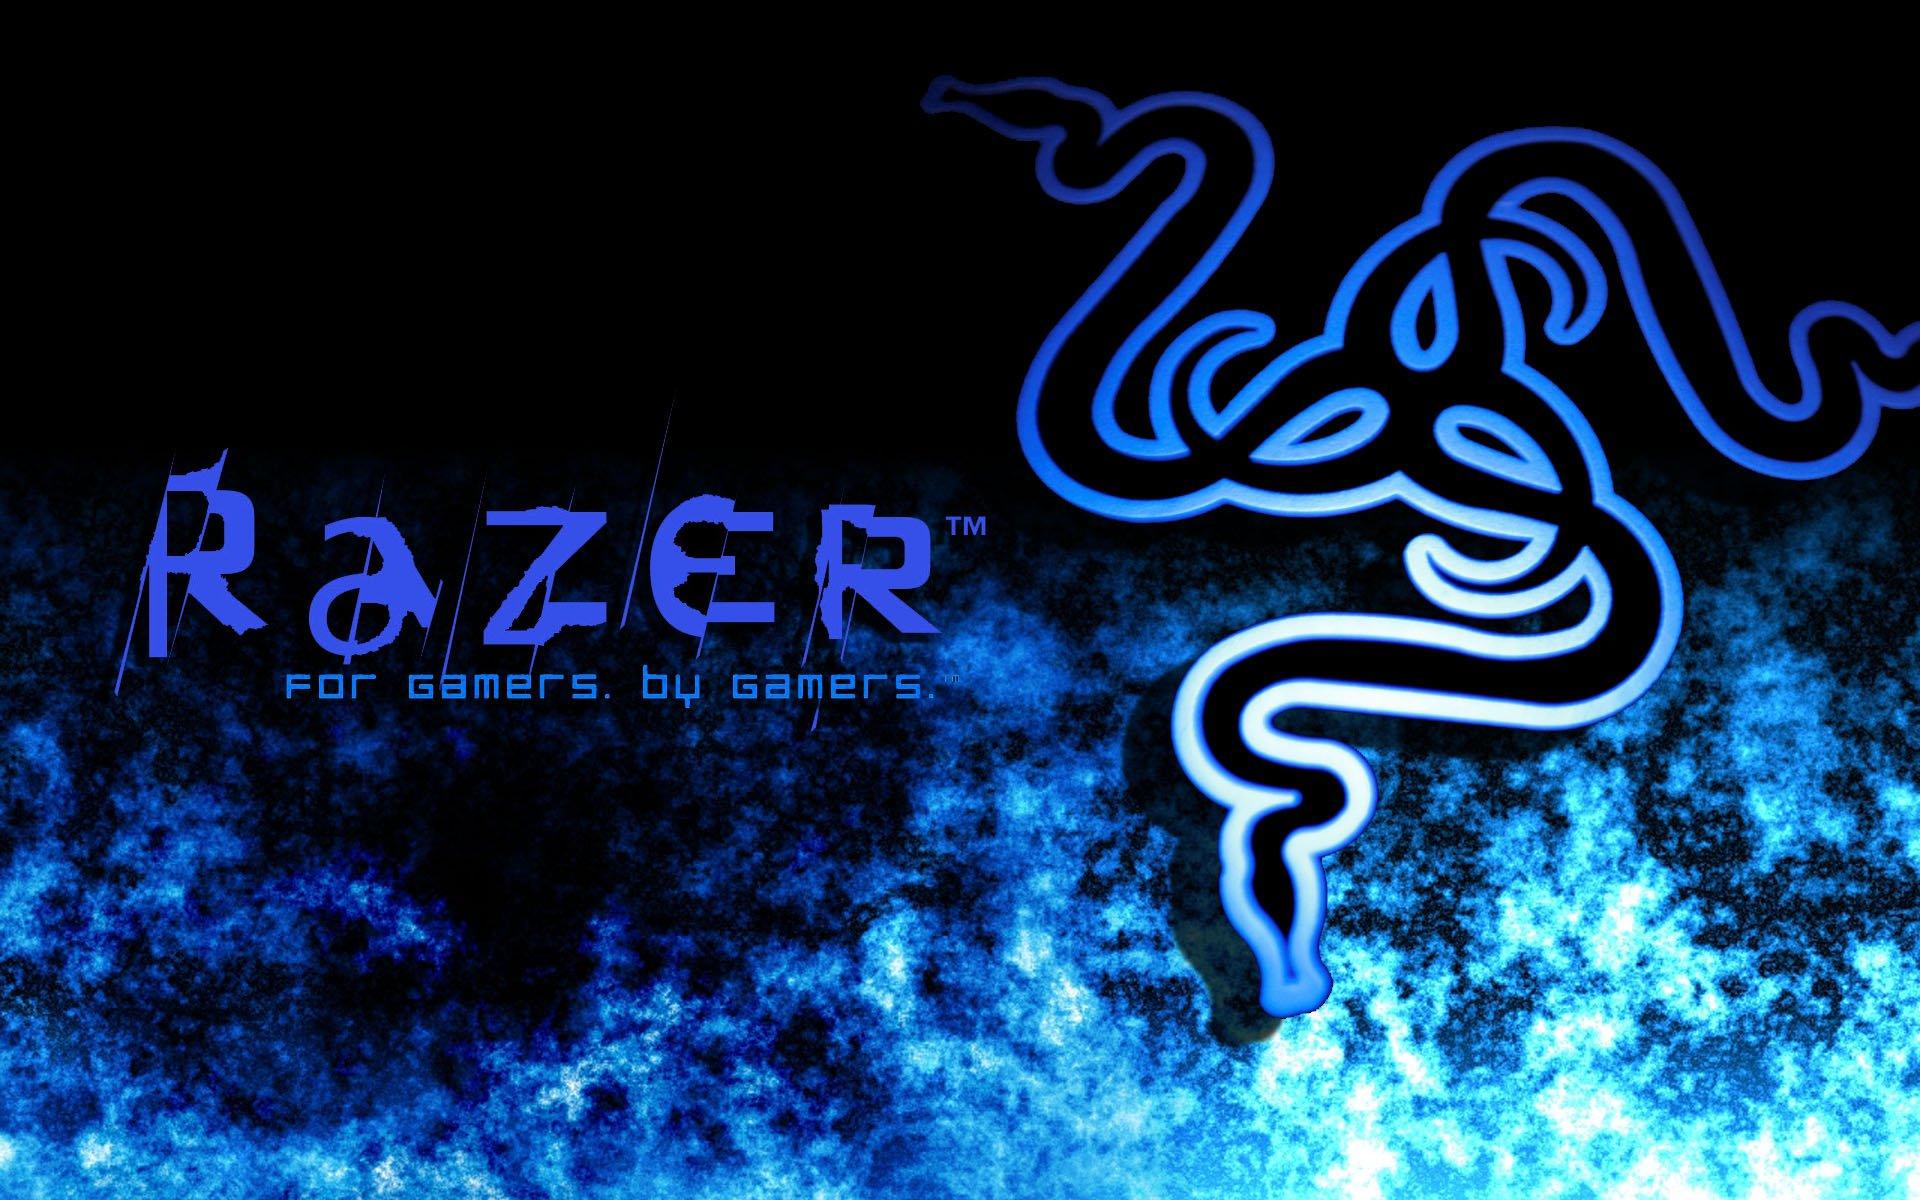 Razer gaming desktop background